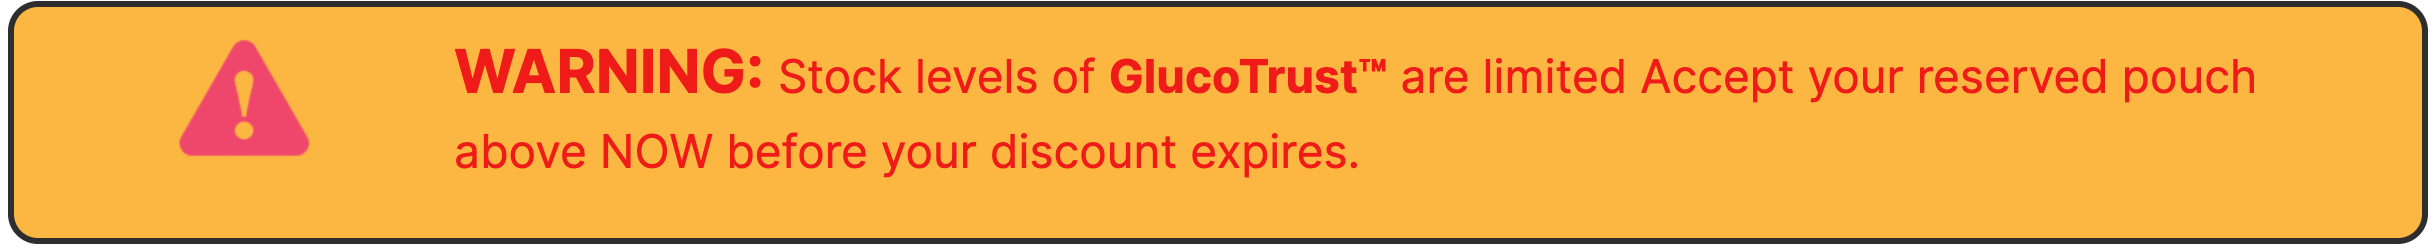 GlucoTrust - WARNING